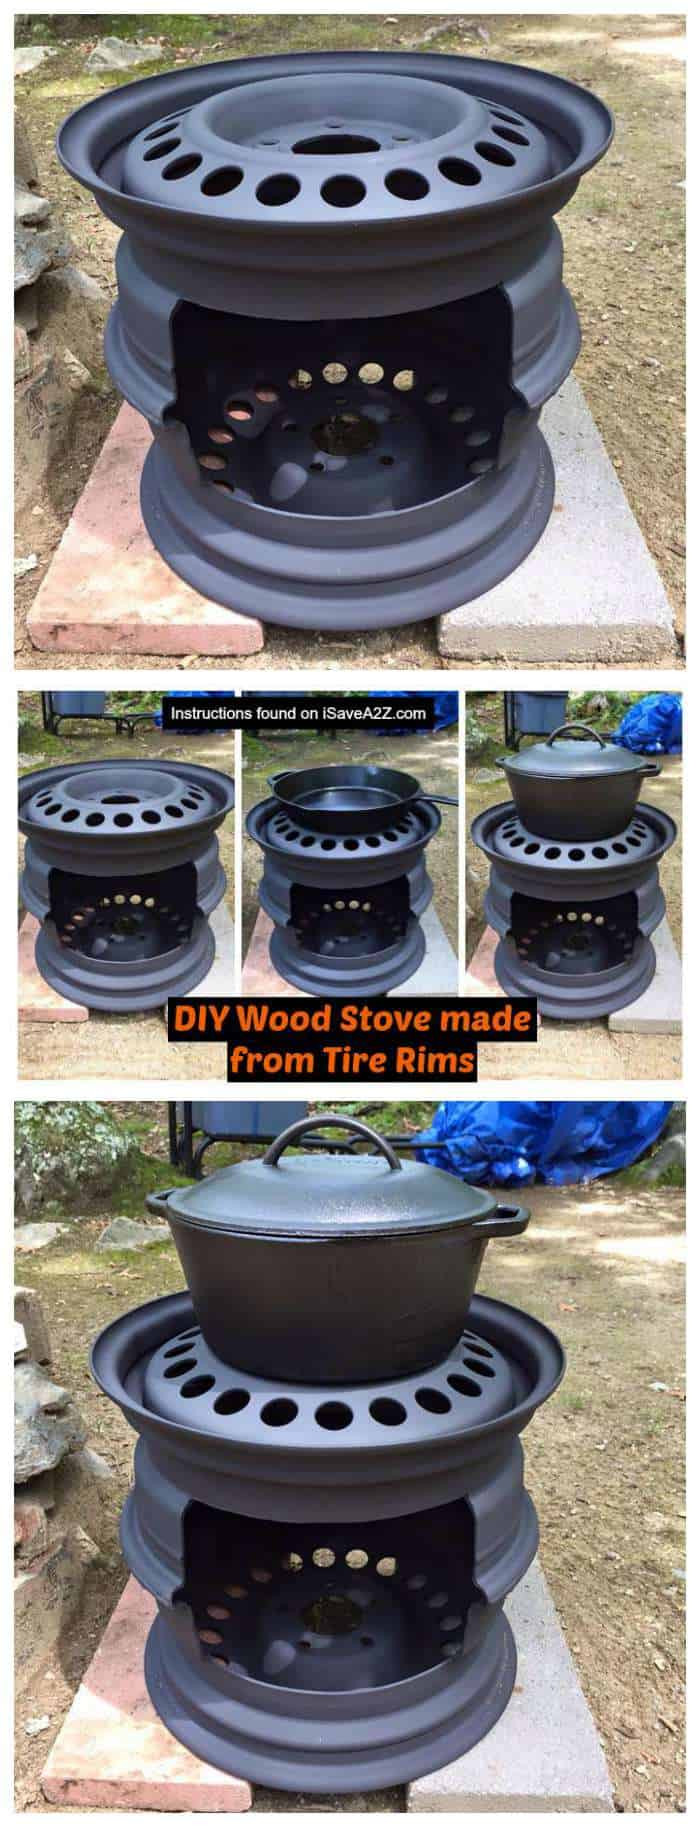 DIY Wood Stove
 DIY Wood Stove made from Tire Rims iSaveA2Z